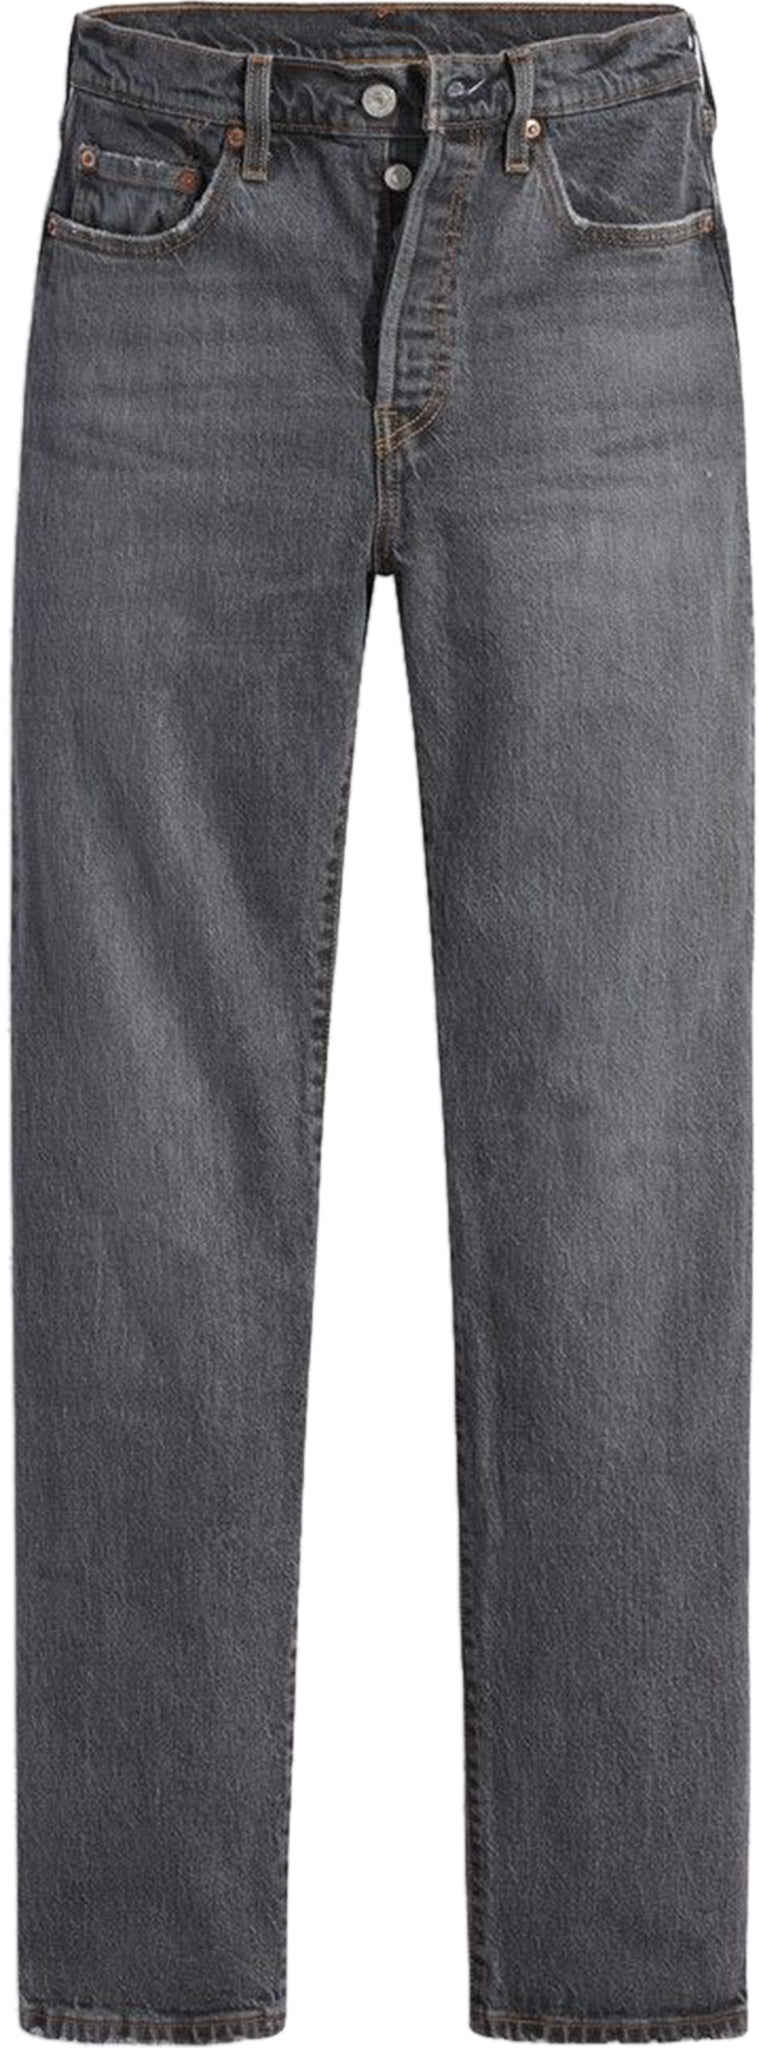 Levi's 501 Stretch Skinny Jeans - Women's | The Last Hunt